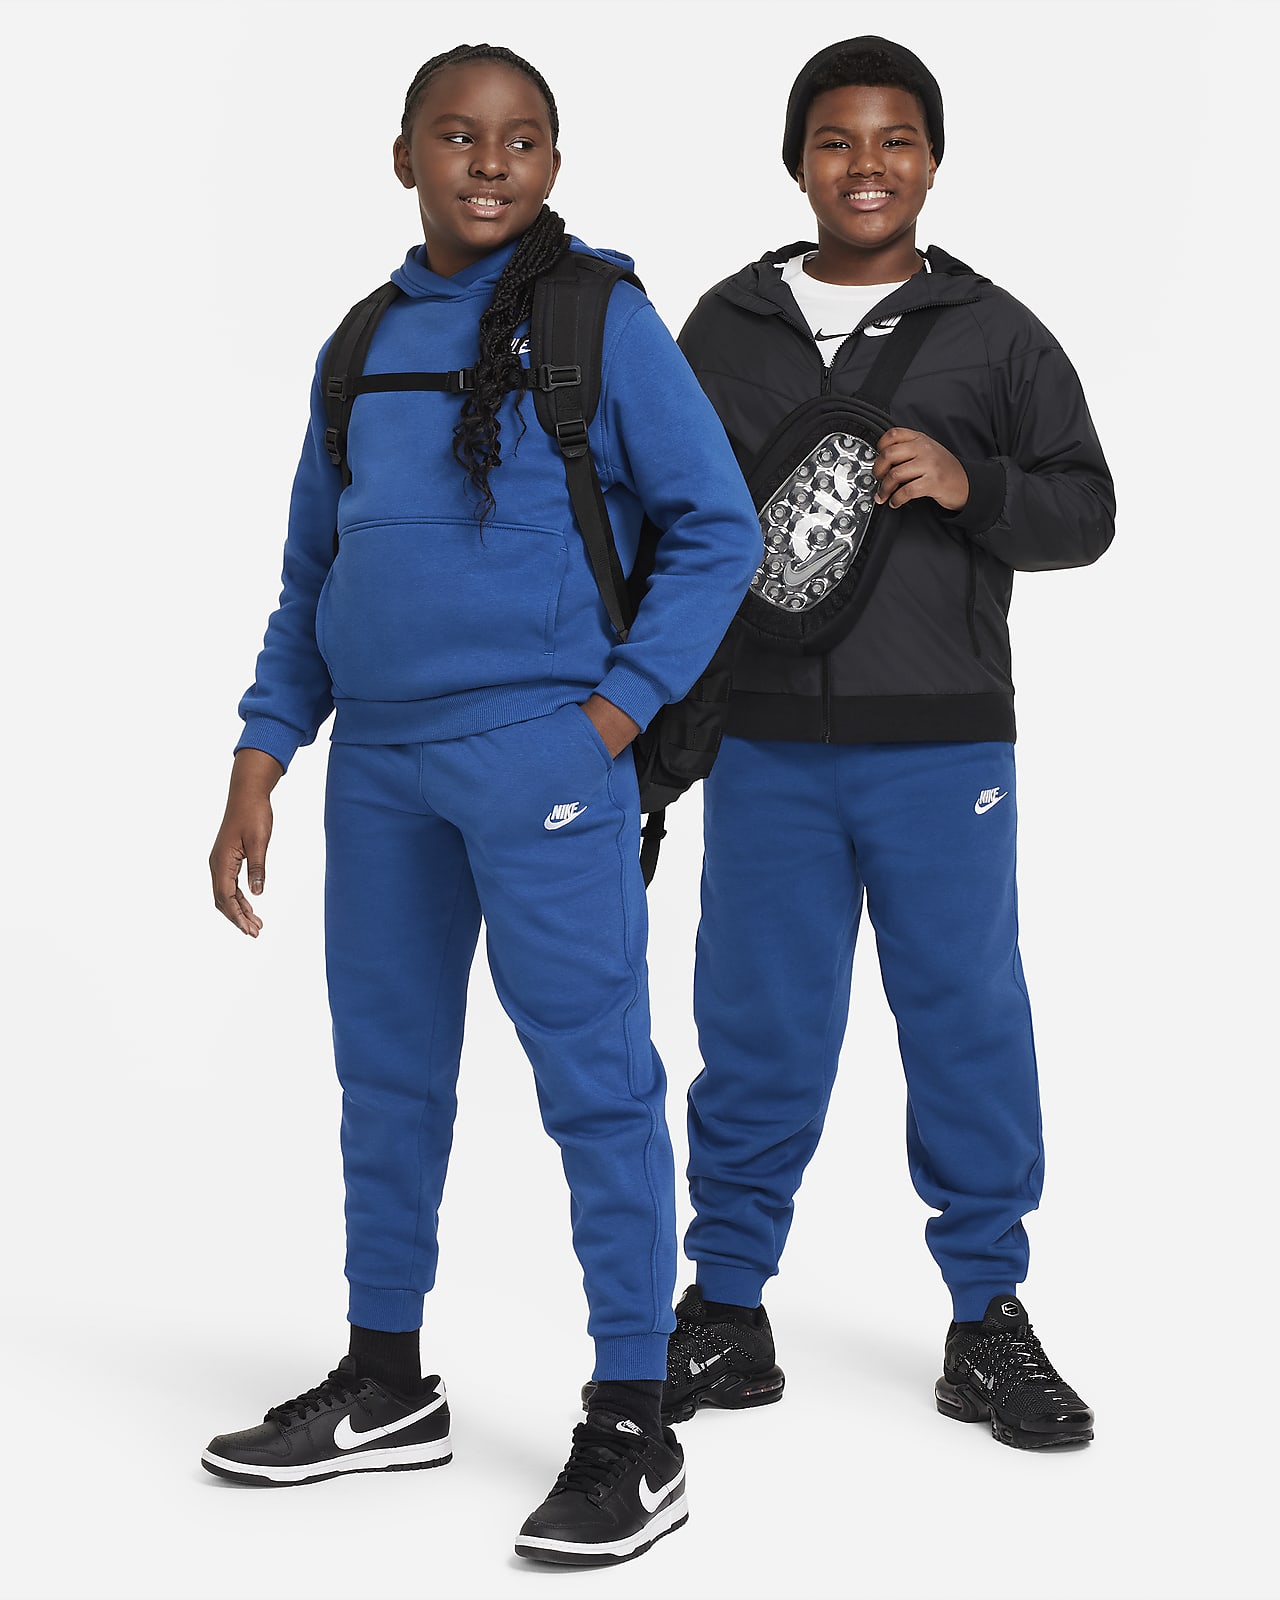 Nike Children's Apparel Boys' Toddler Fleece Jogger Pants, Black